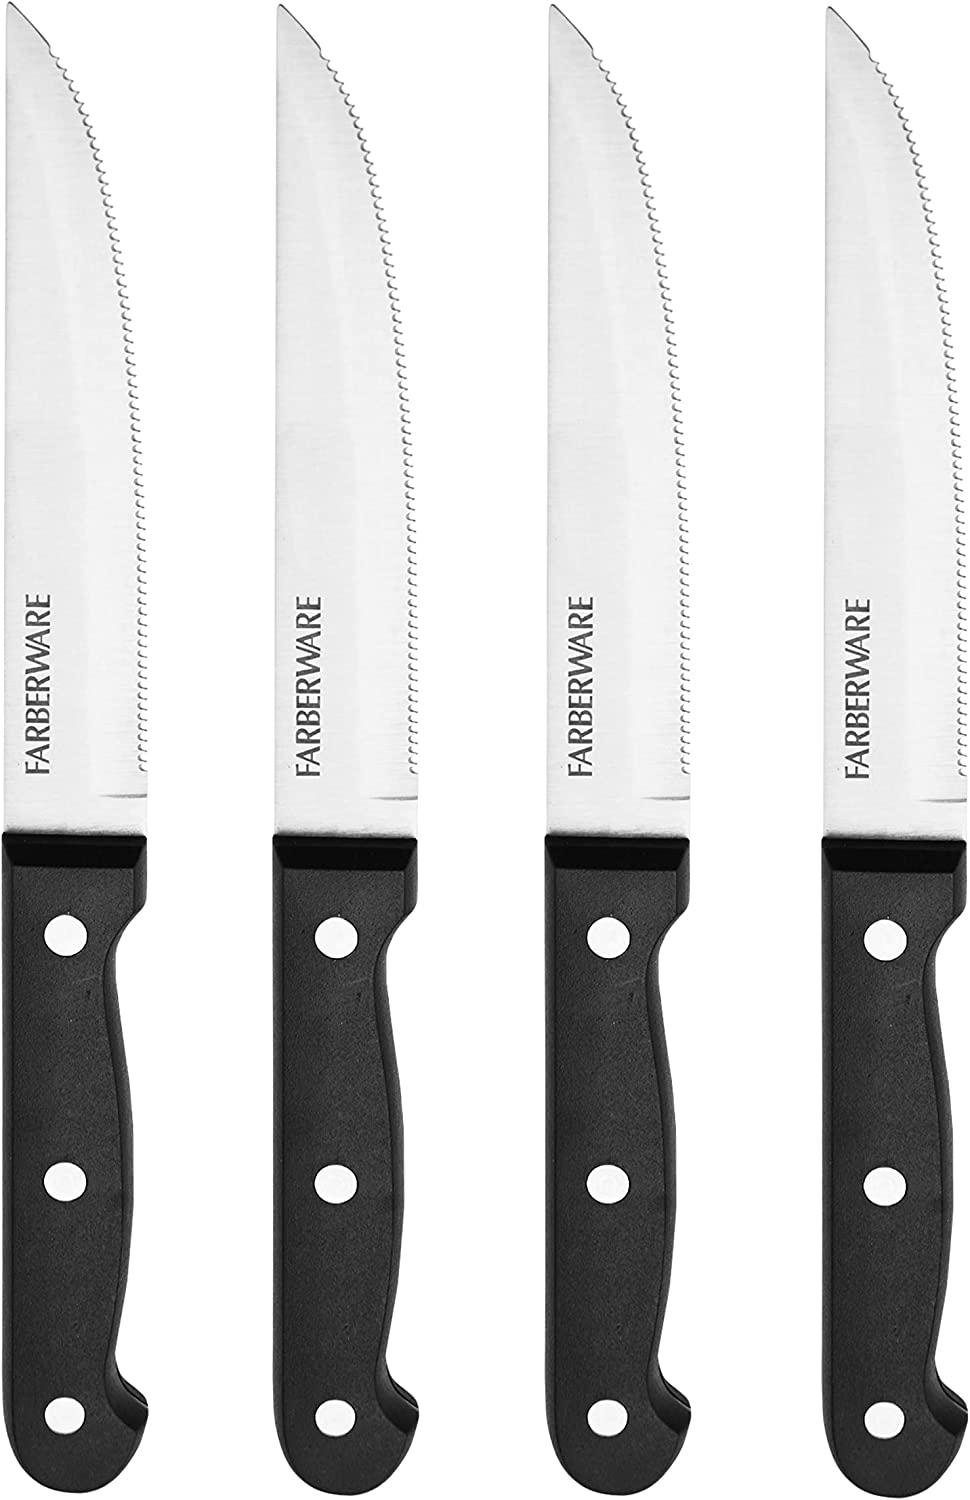 Best Carbon Kitchen Knives: Material, Farberware,  Basics